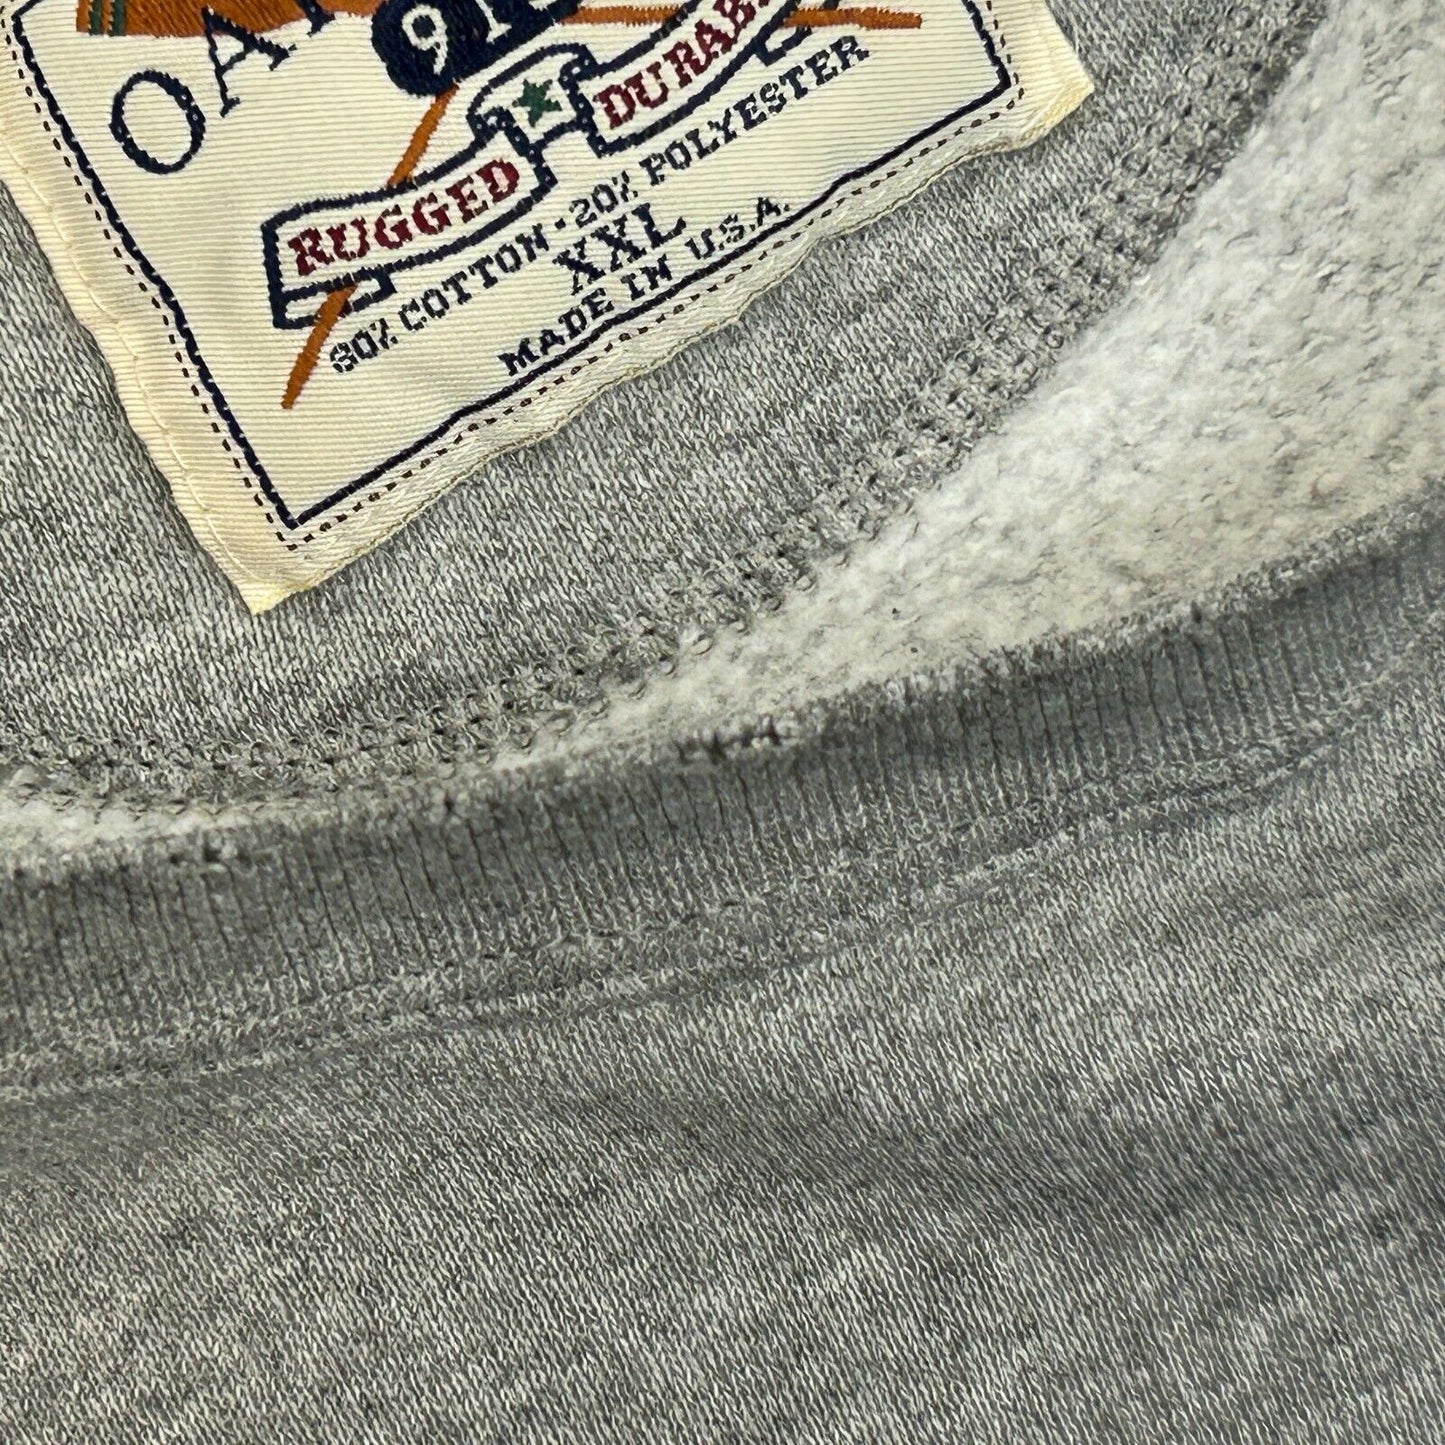 College of Notre Dame Vintage 90s Sweatshirt 2XL XXL University USA Mens Gray